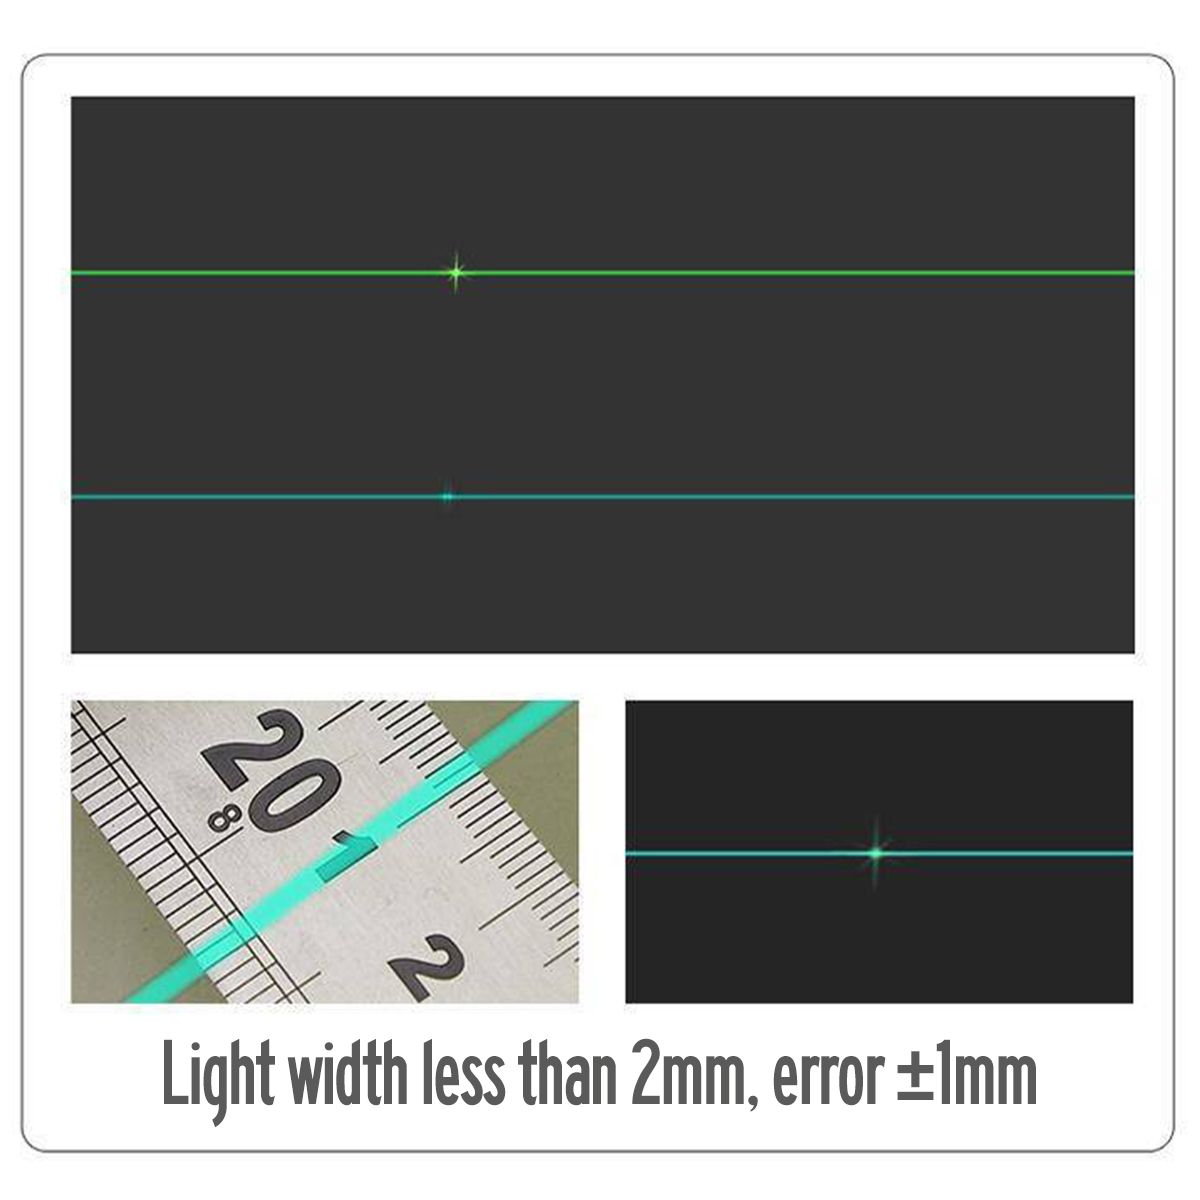 12-Lines-Laser-Level-Self-Leveling-3D-360deg-Floor-Leveling-Measure-Tools-1473186